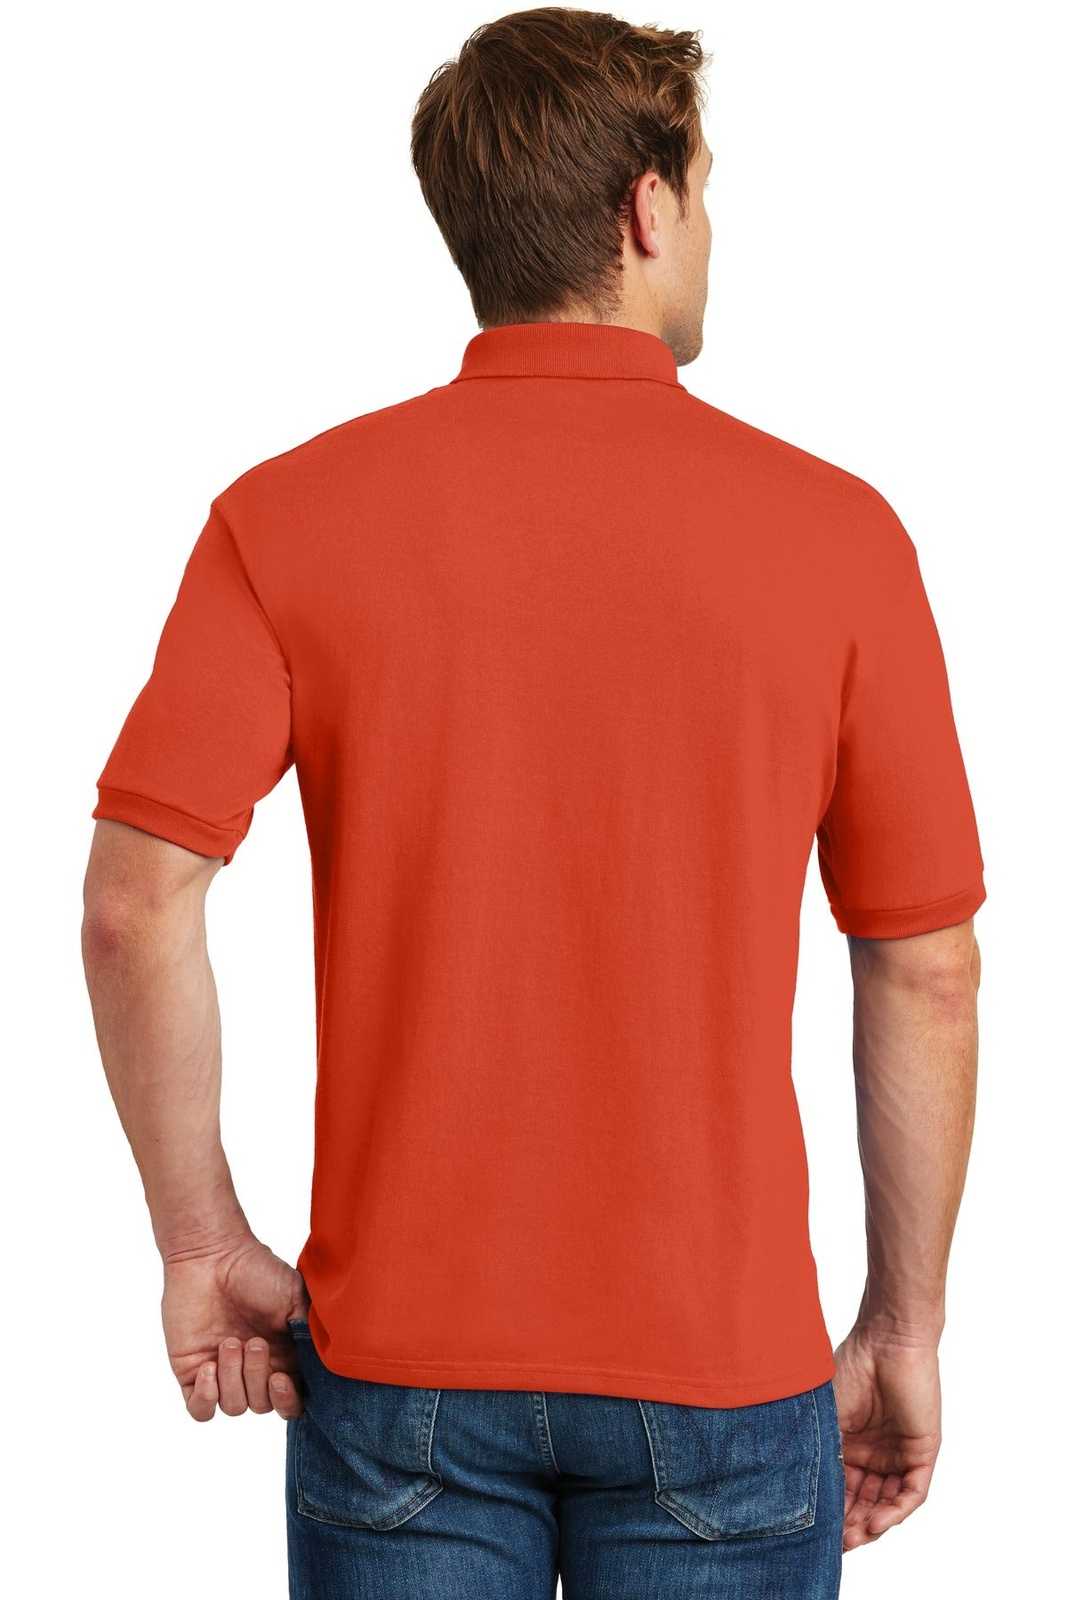 Hanes 054X Ecosmart 5.2-Ounce Jersey Knit Sport Shirt - Orange - HIT a Double